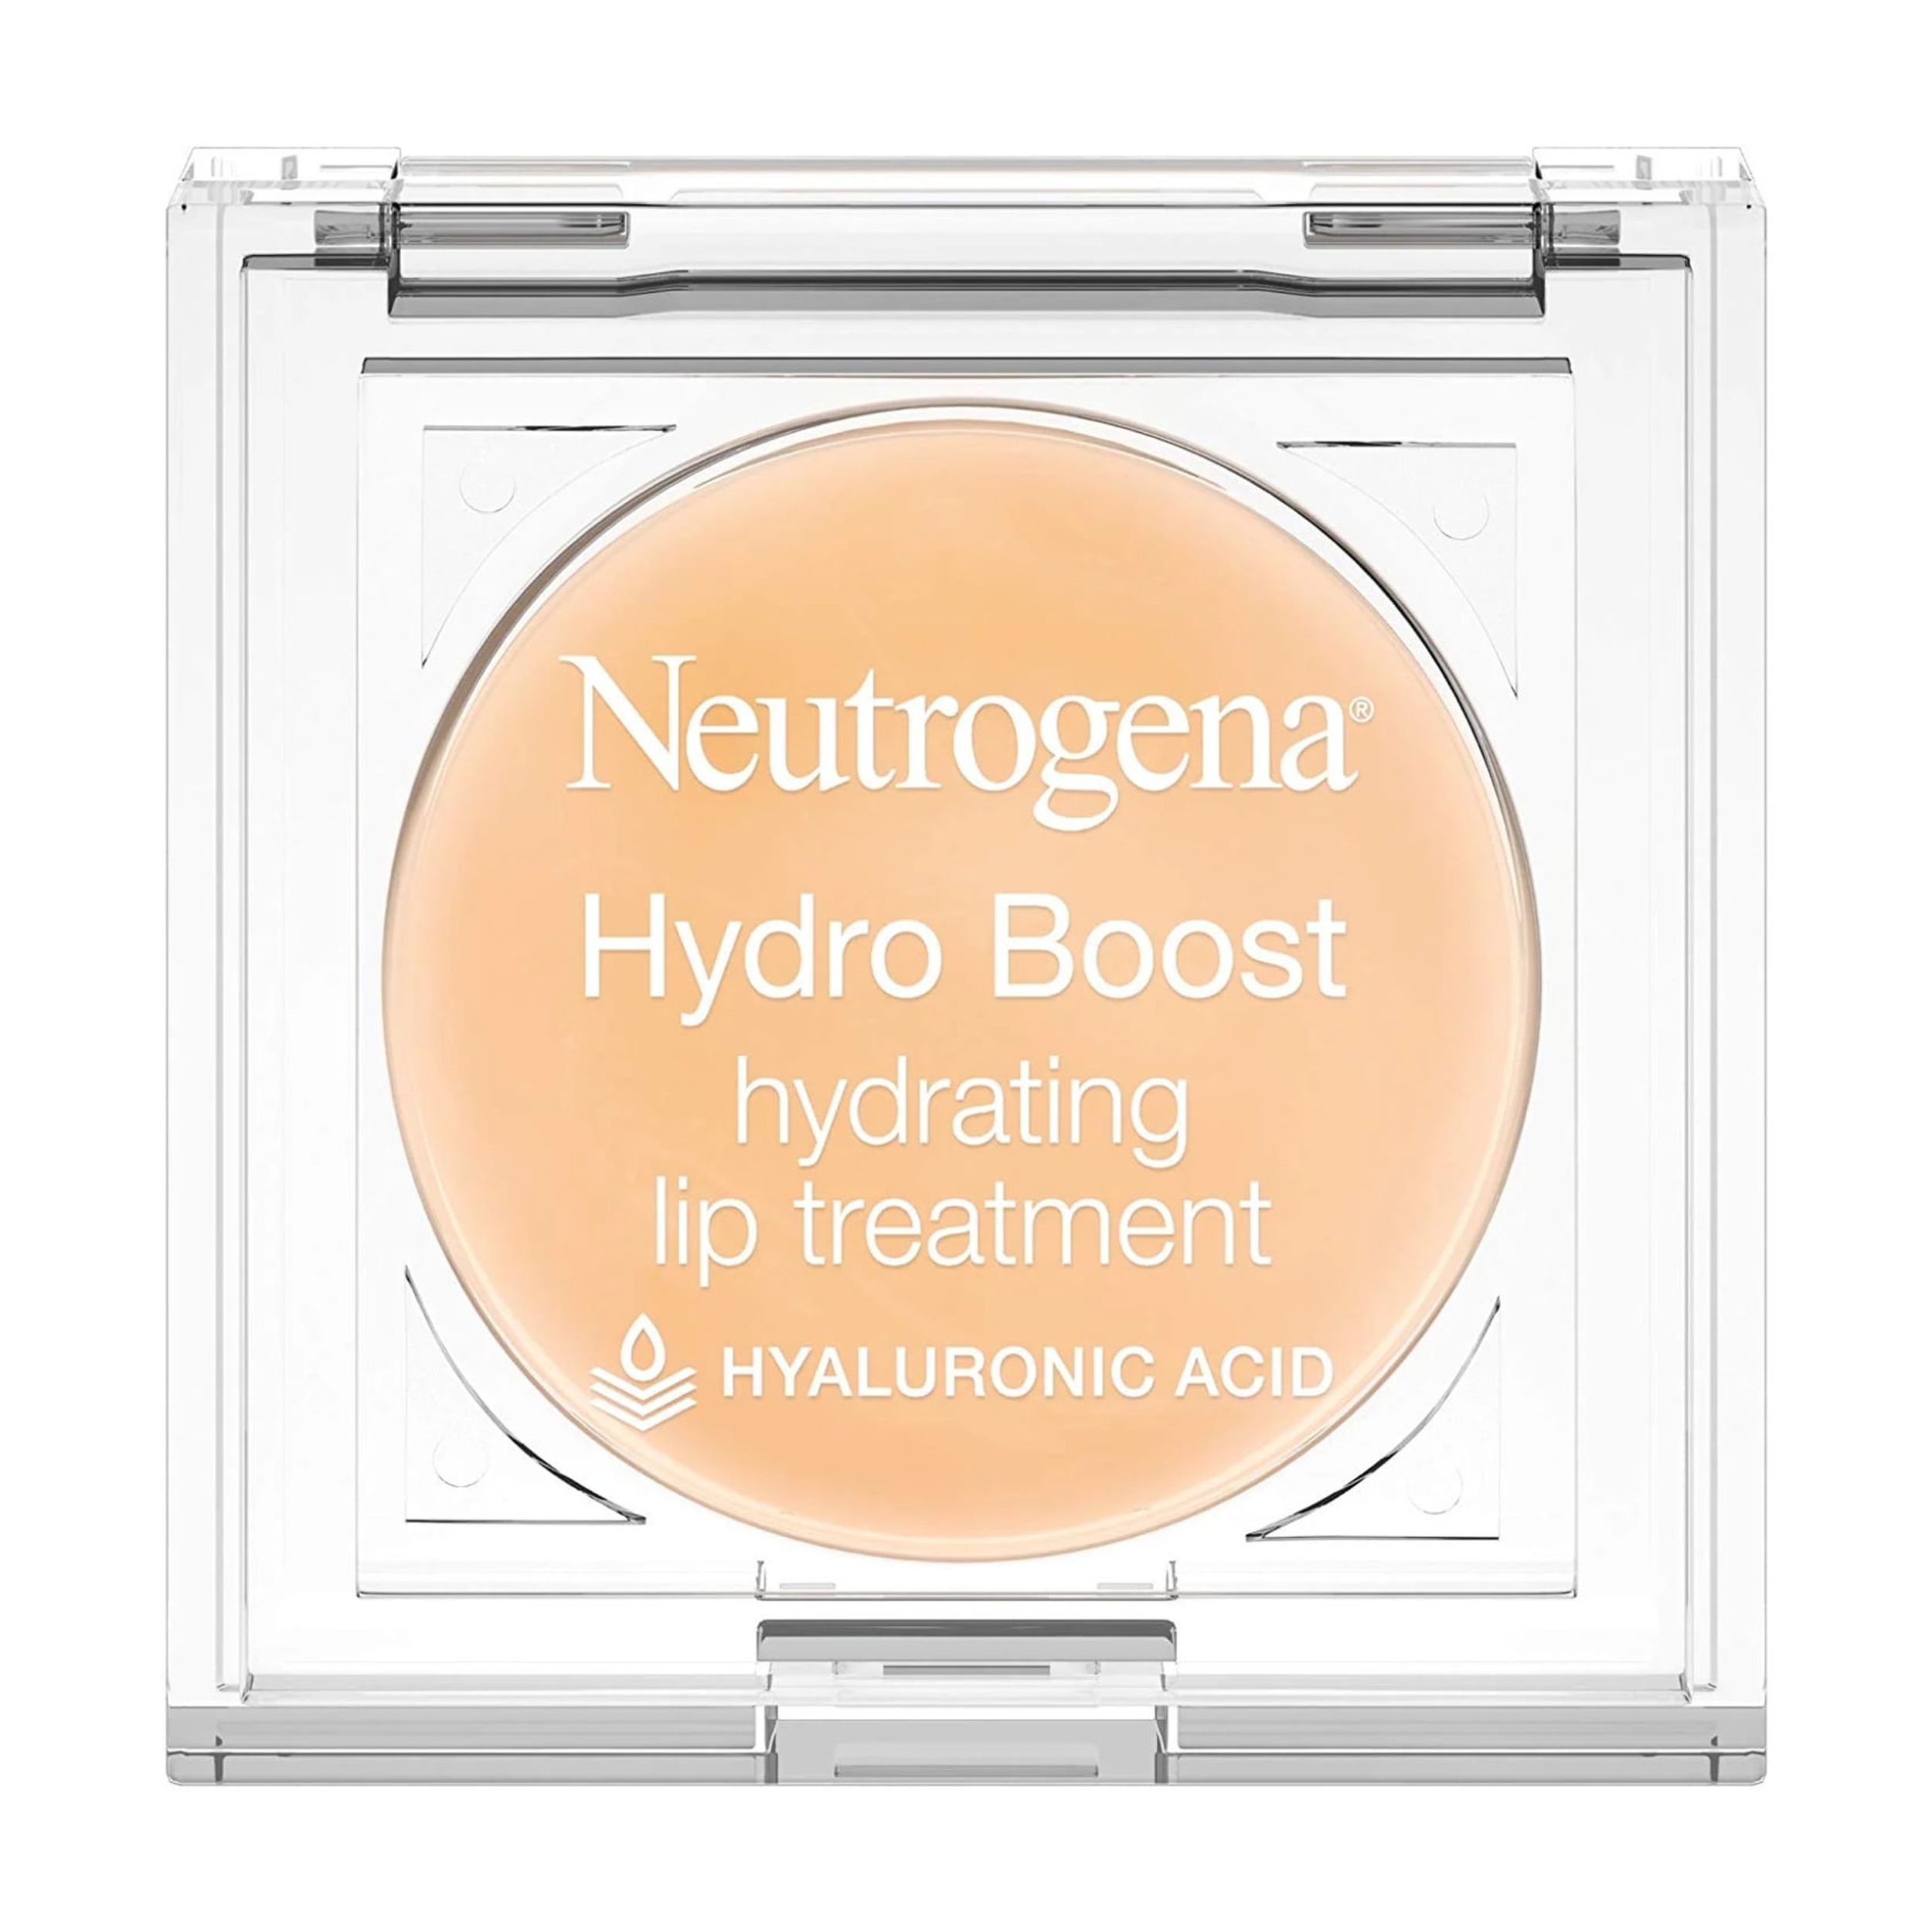 Neutrogena Hydro Boost Lip Treatment with Hyaluronic Acid, 0.10 Oz - image 1 of 9